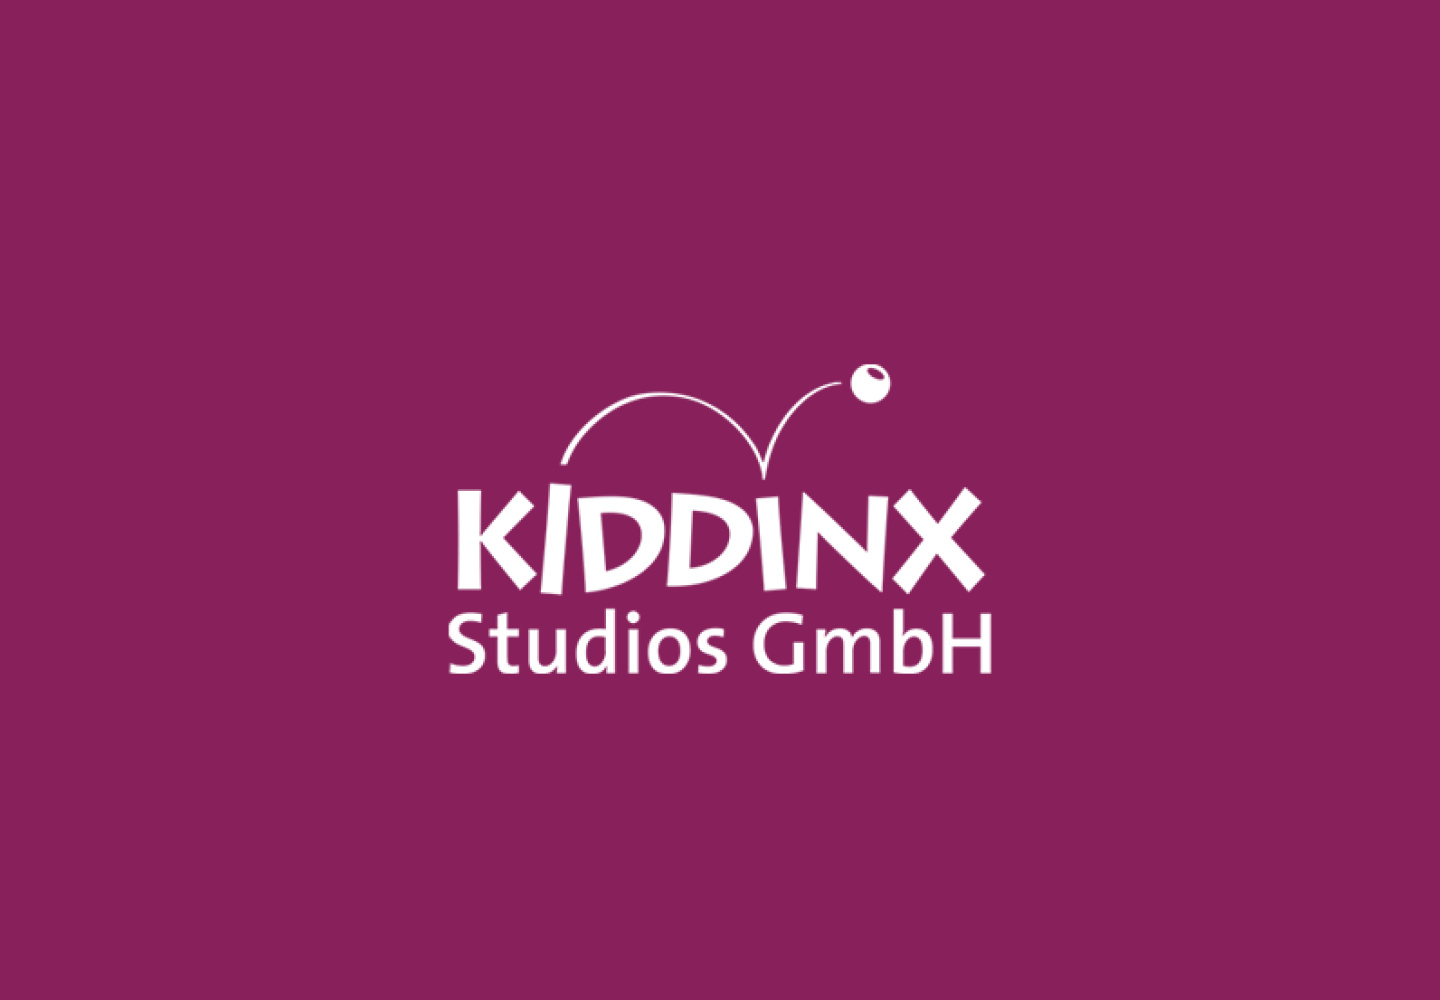 KIDDINX Studios